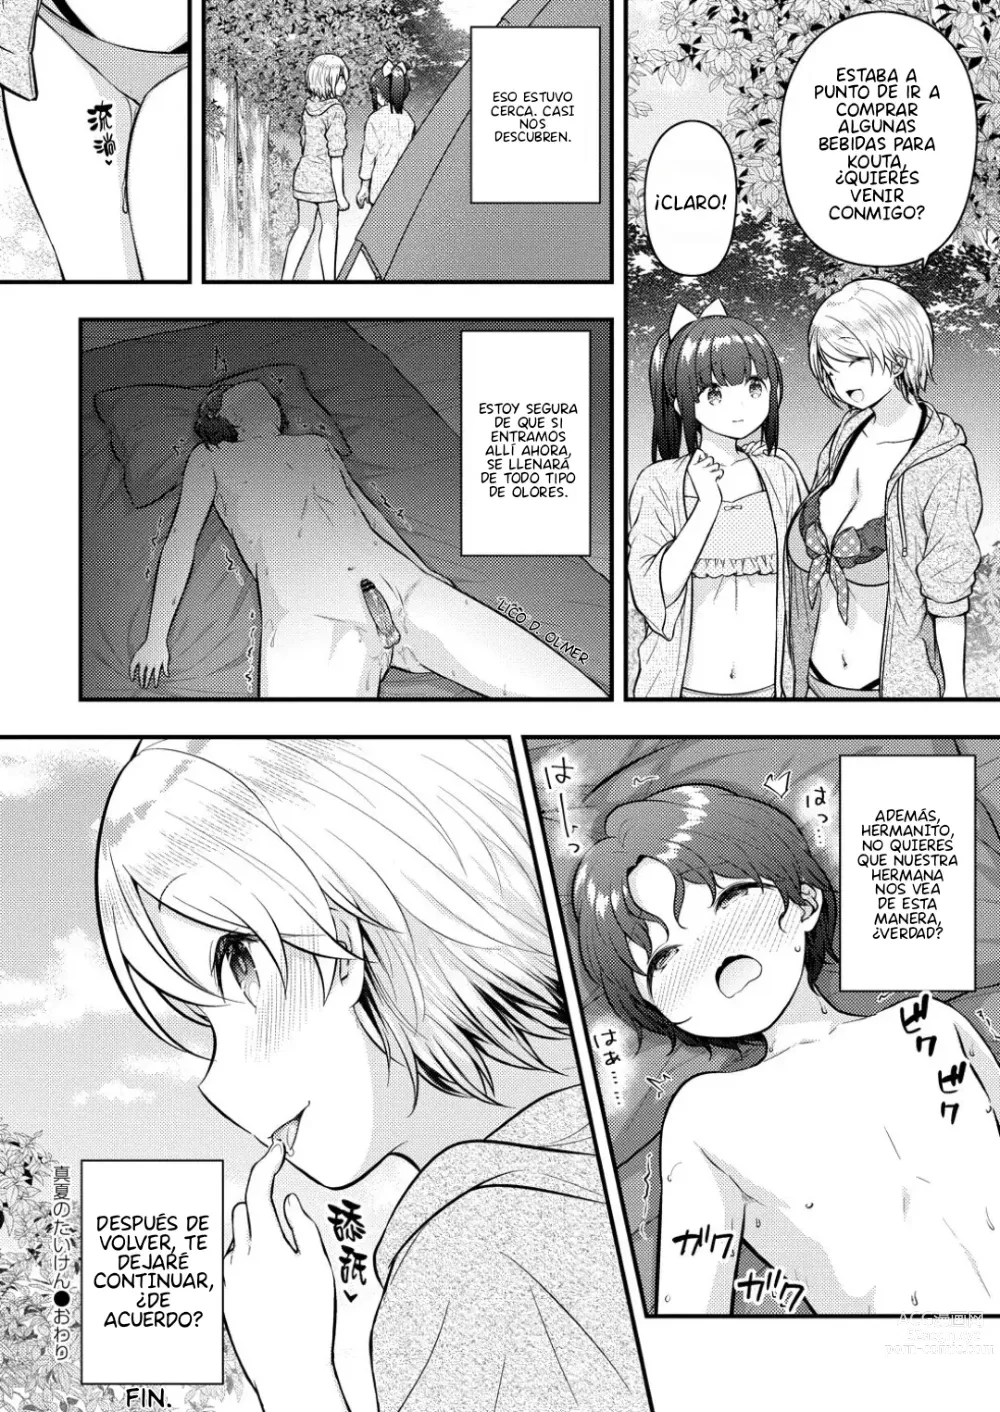 Page 24 of manga Una aventura de Verano.